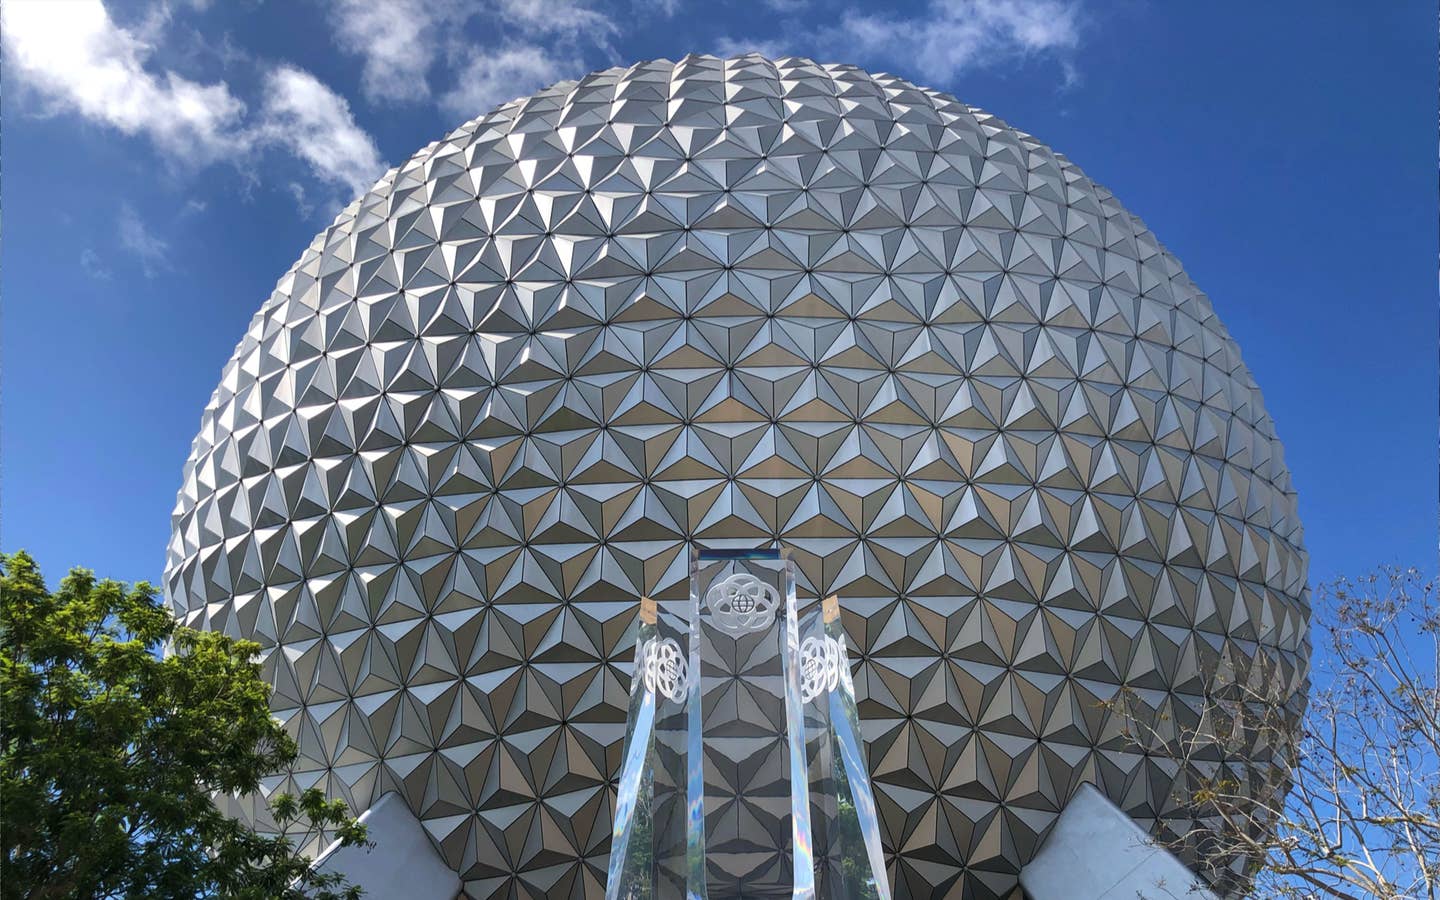 Spaceship Earth in EPCOT at Walt Disney World®.